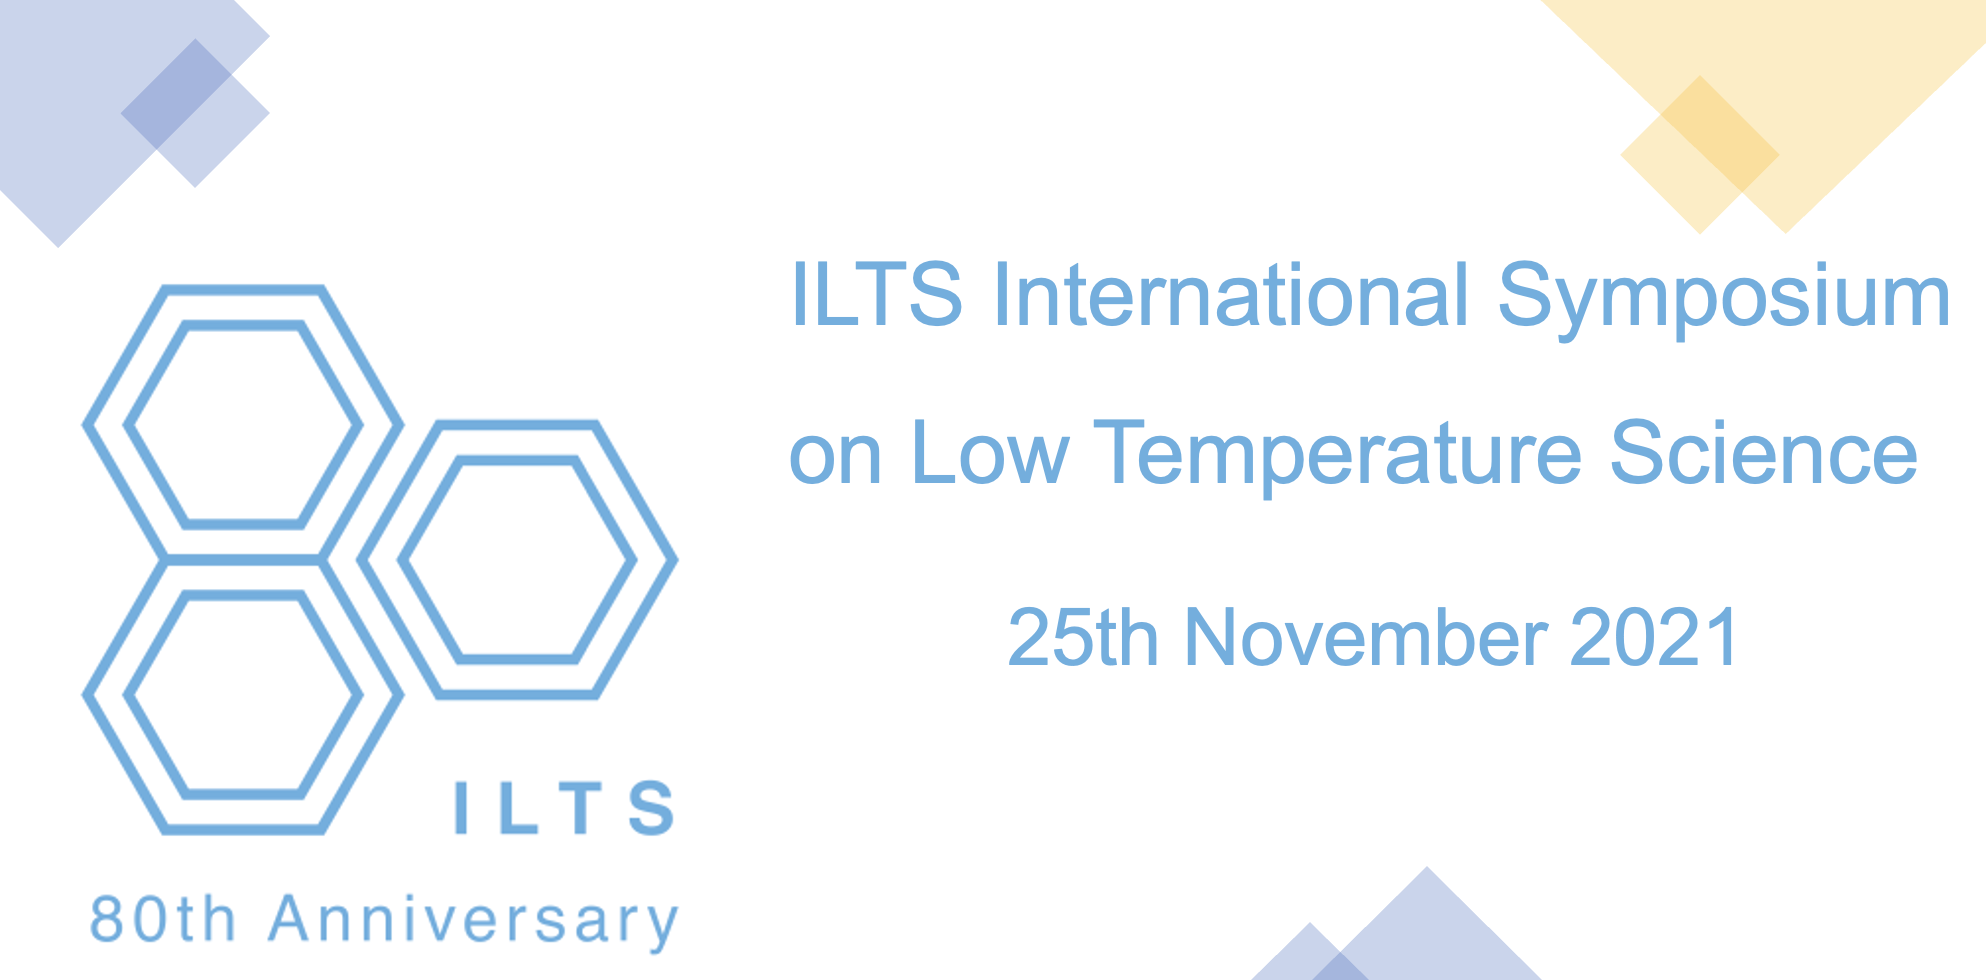 ILTS International Symposium 2021